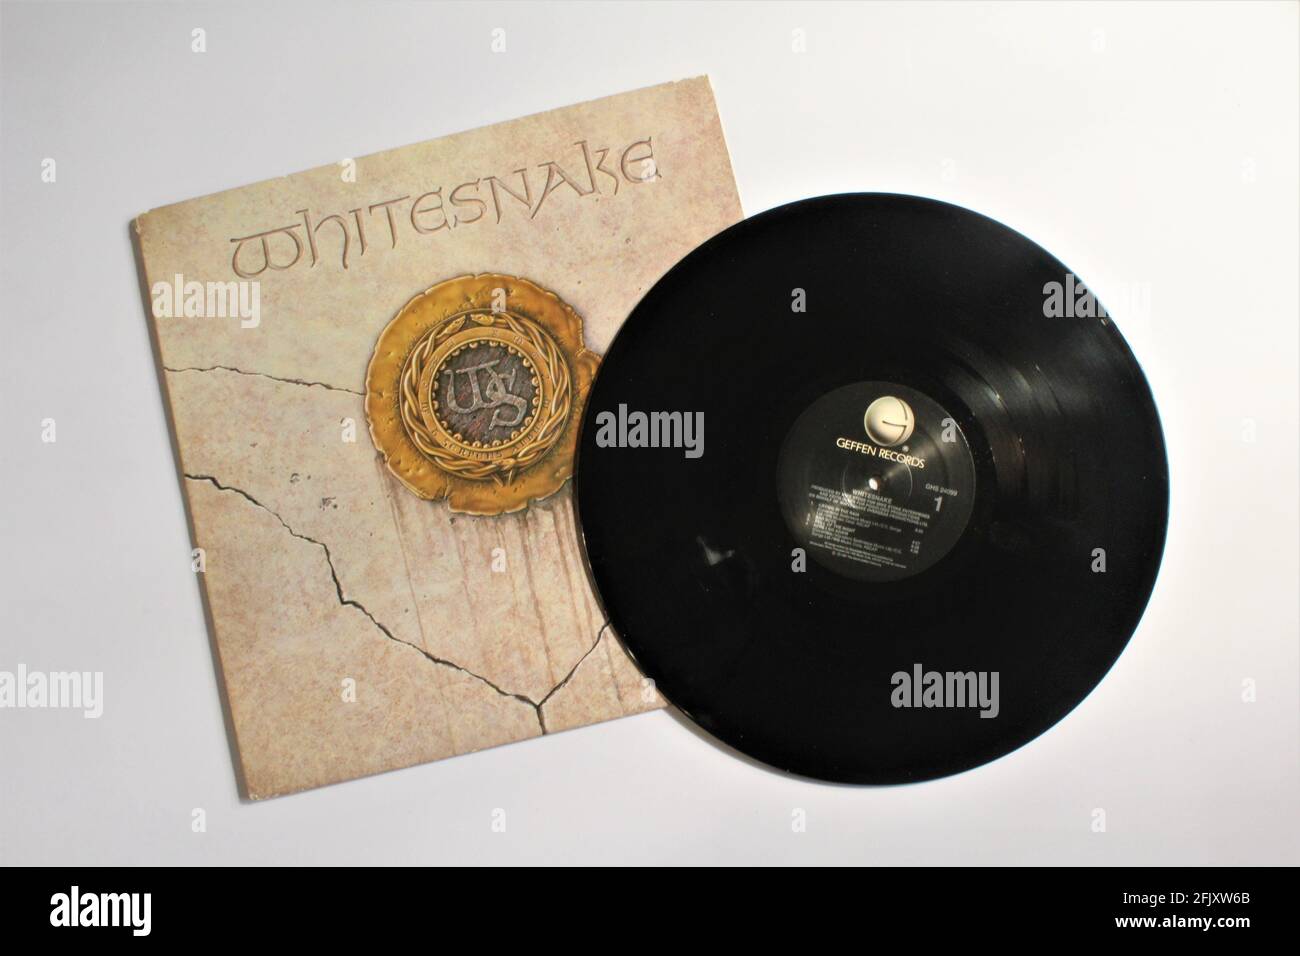 Classic rock band, Whitesnake, music album on vinyl record LP disc. Self titled album. Stock Photo